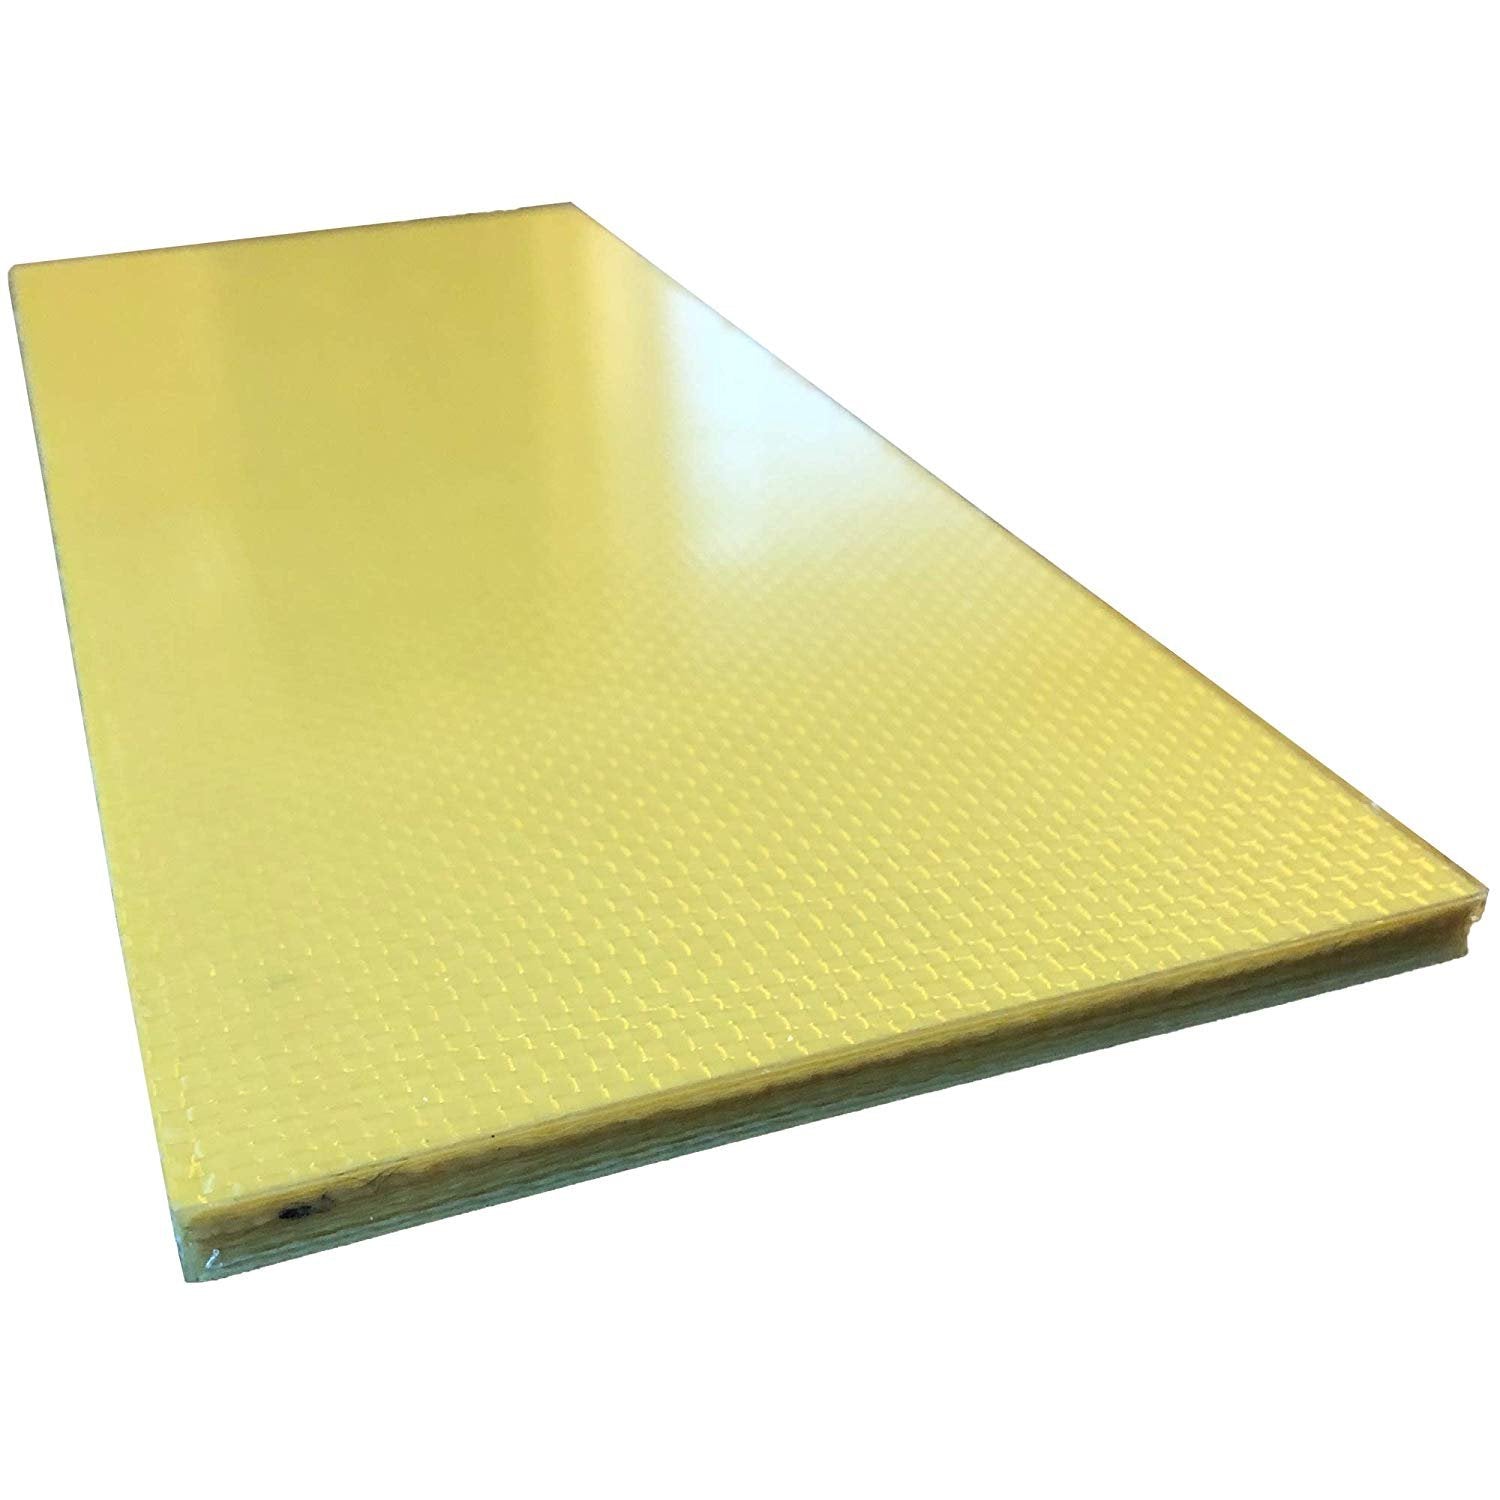 1) Kevlar Plate - 100mm x 250mm x 6mm Thick - 100% Kevlar Plain